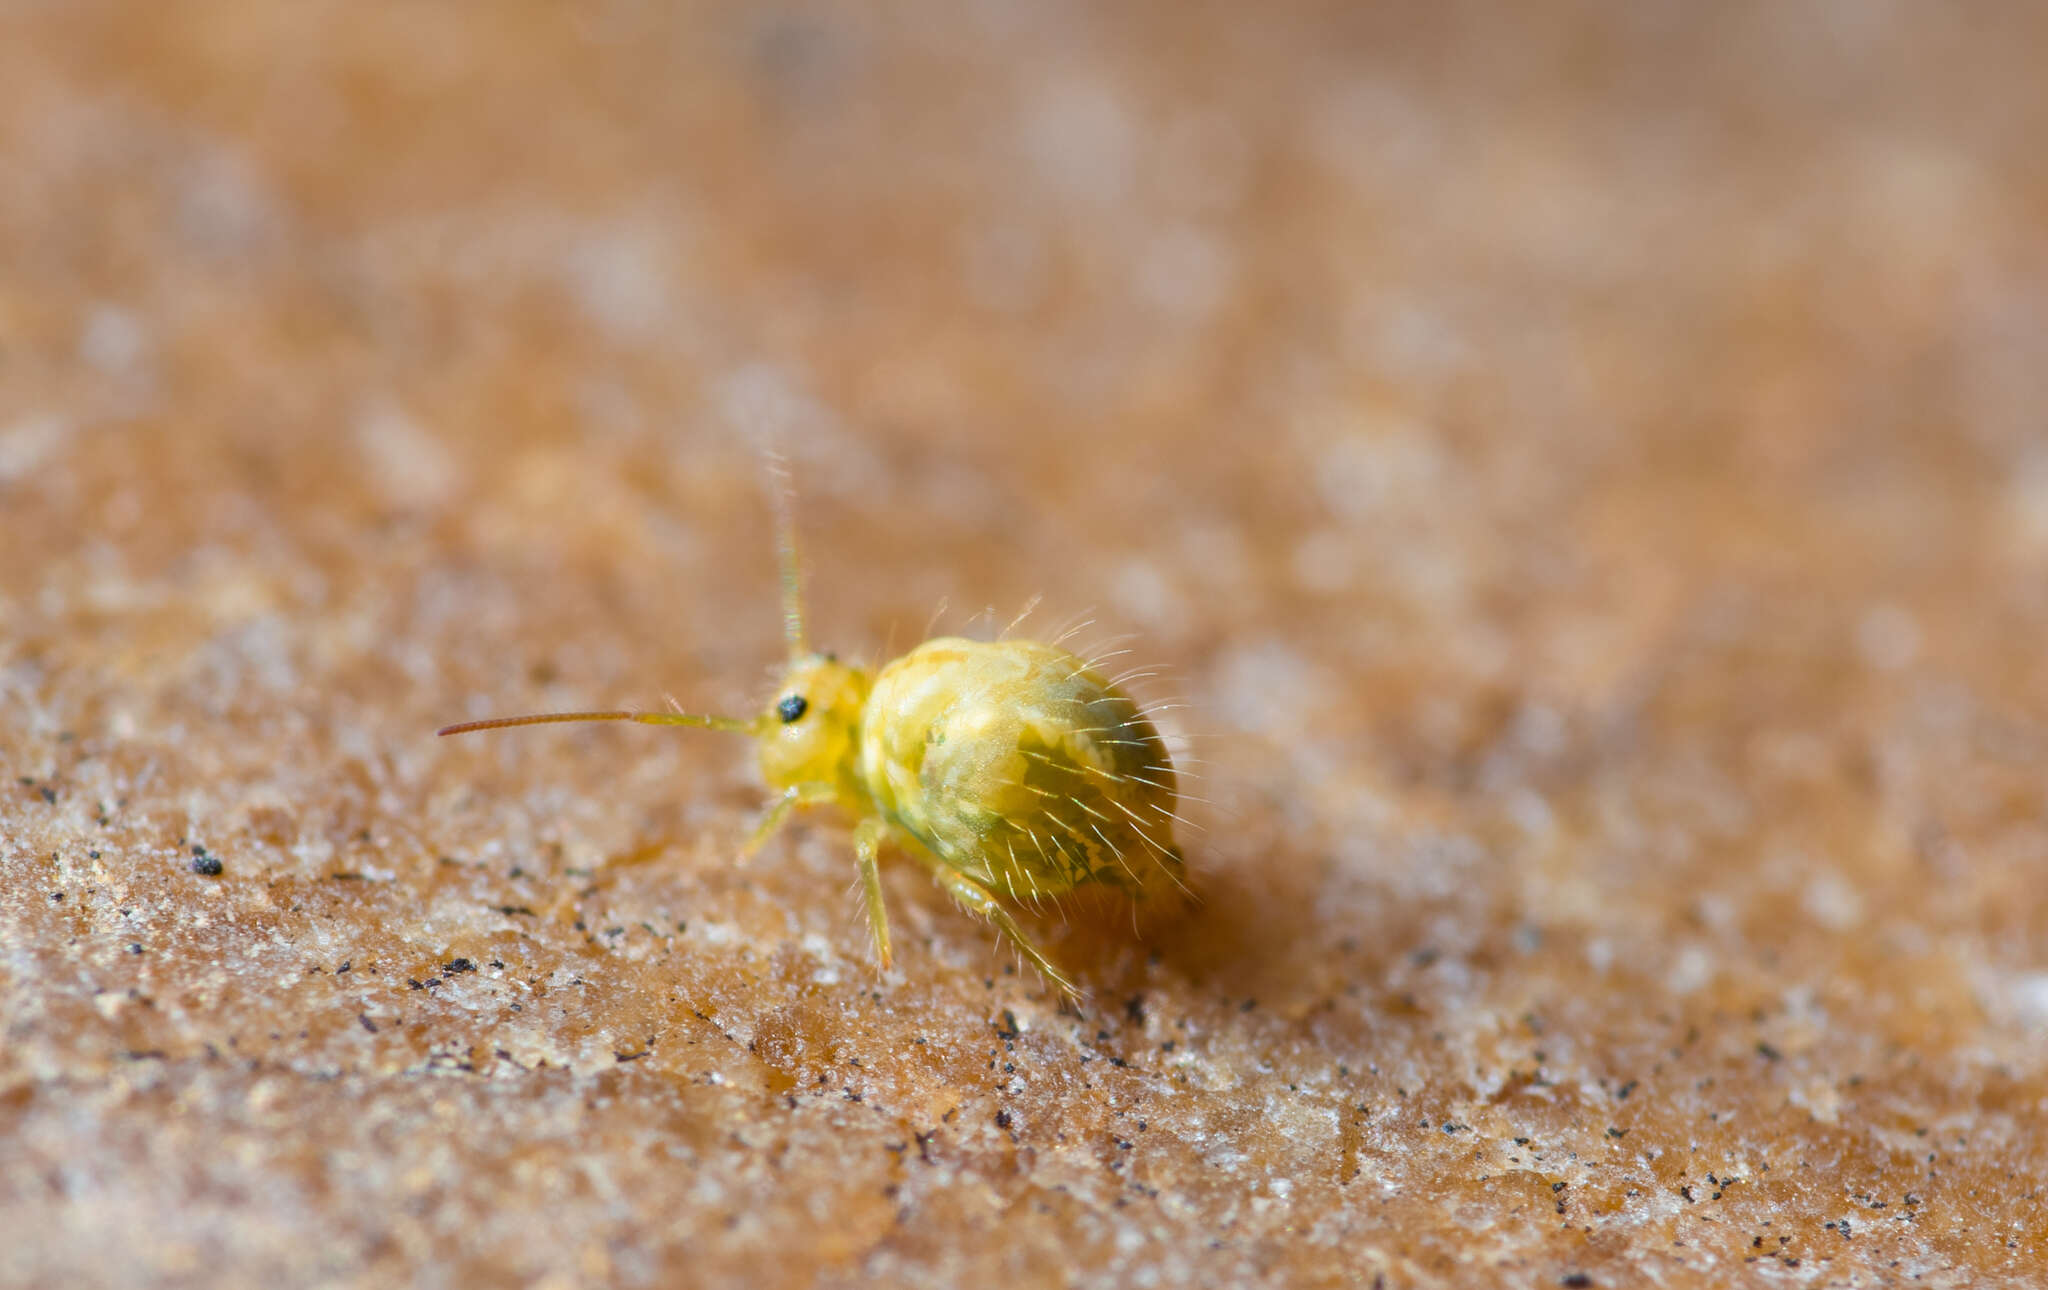 Image of Lucerne flea